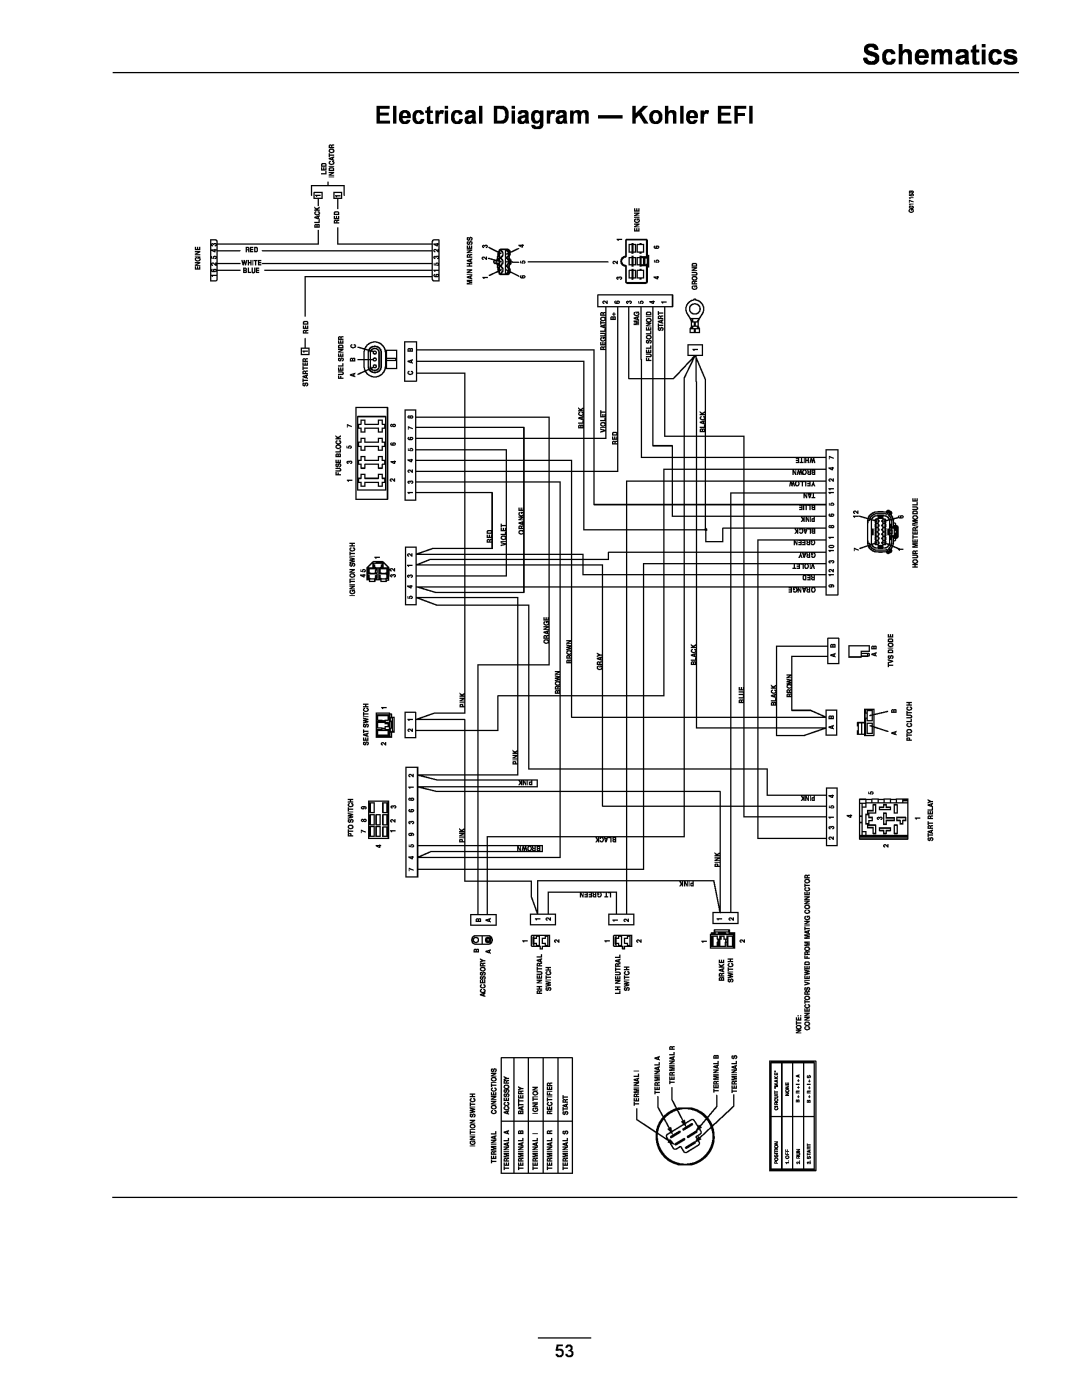 Exmark 000 & higher, 312 manual Electrical Diagram — Kohler EFI, Schematics, Black 